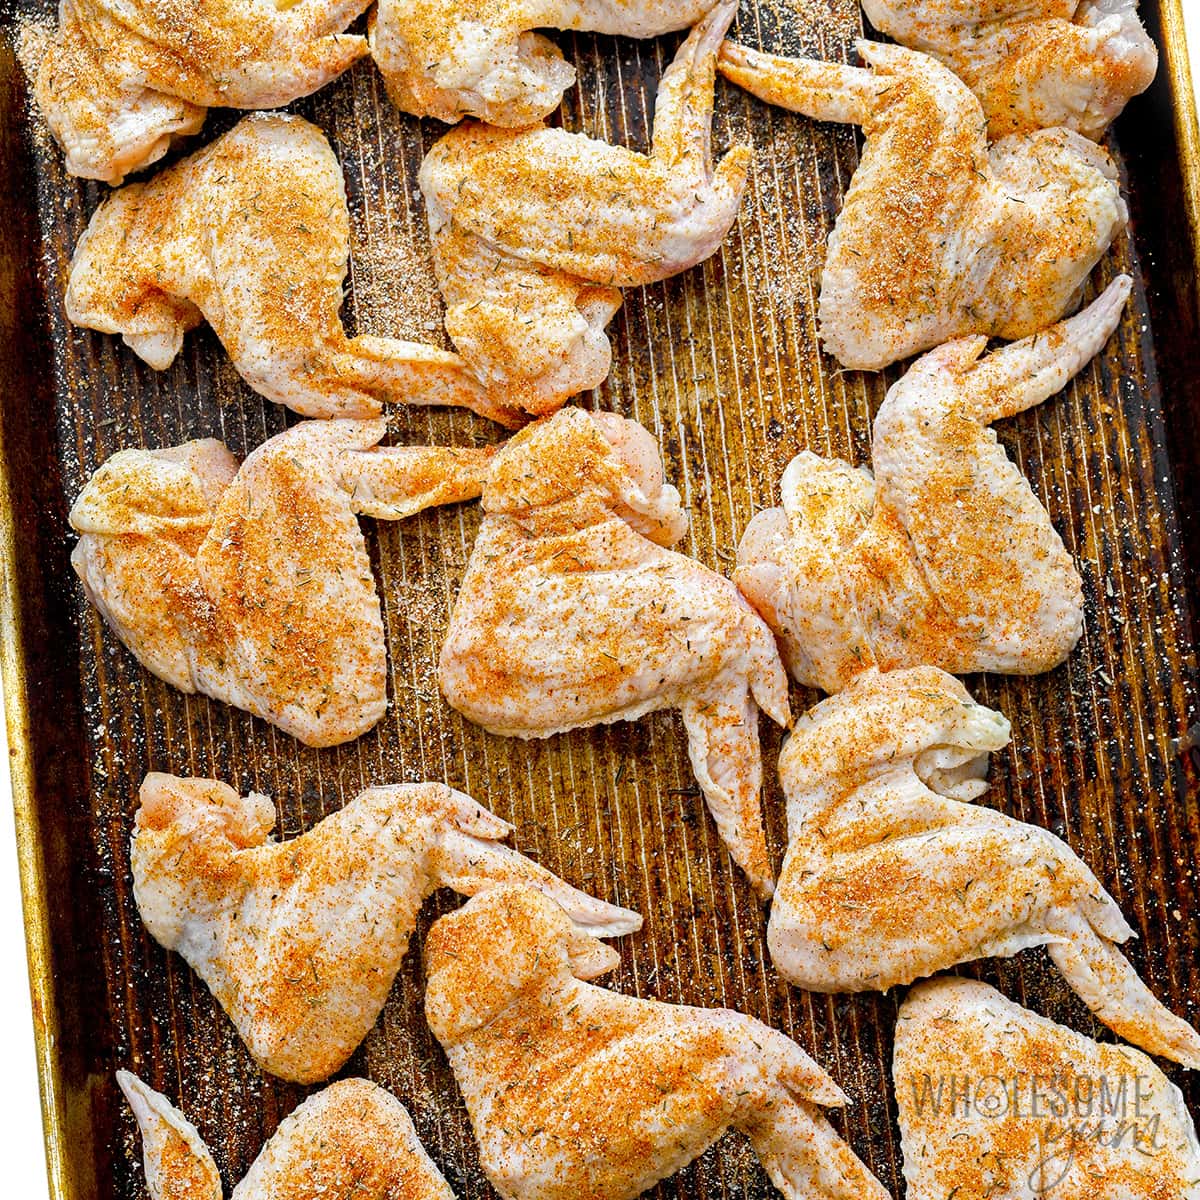 Raw chicken on baking sheet.